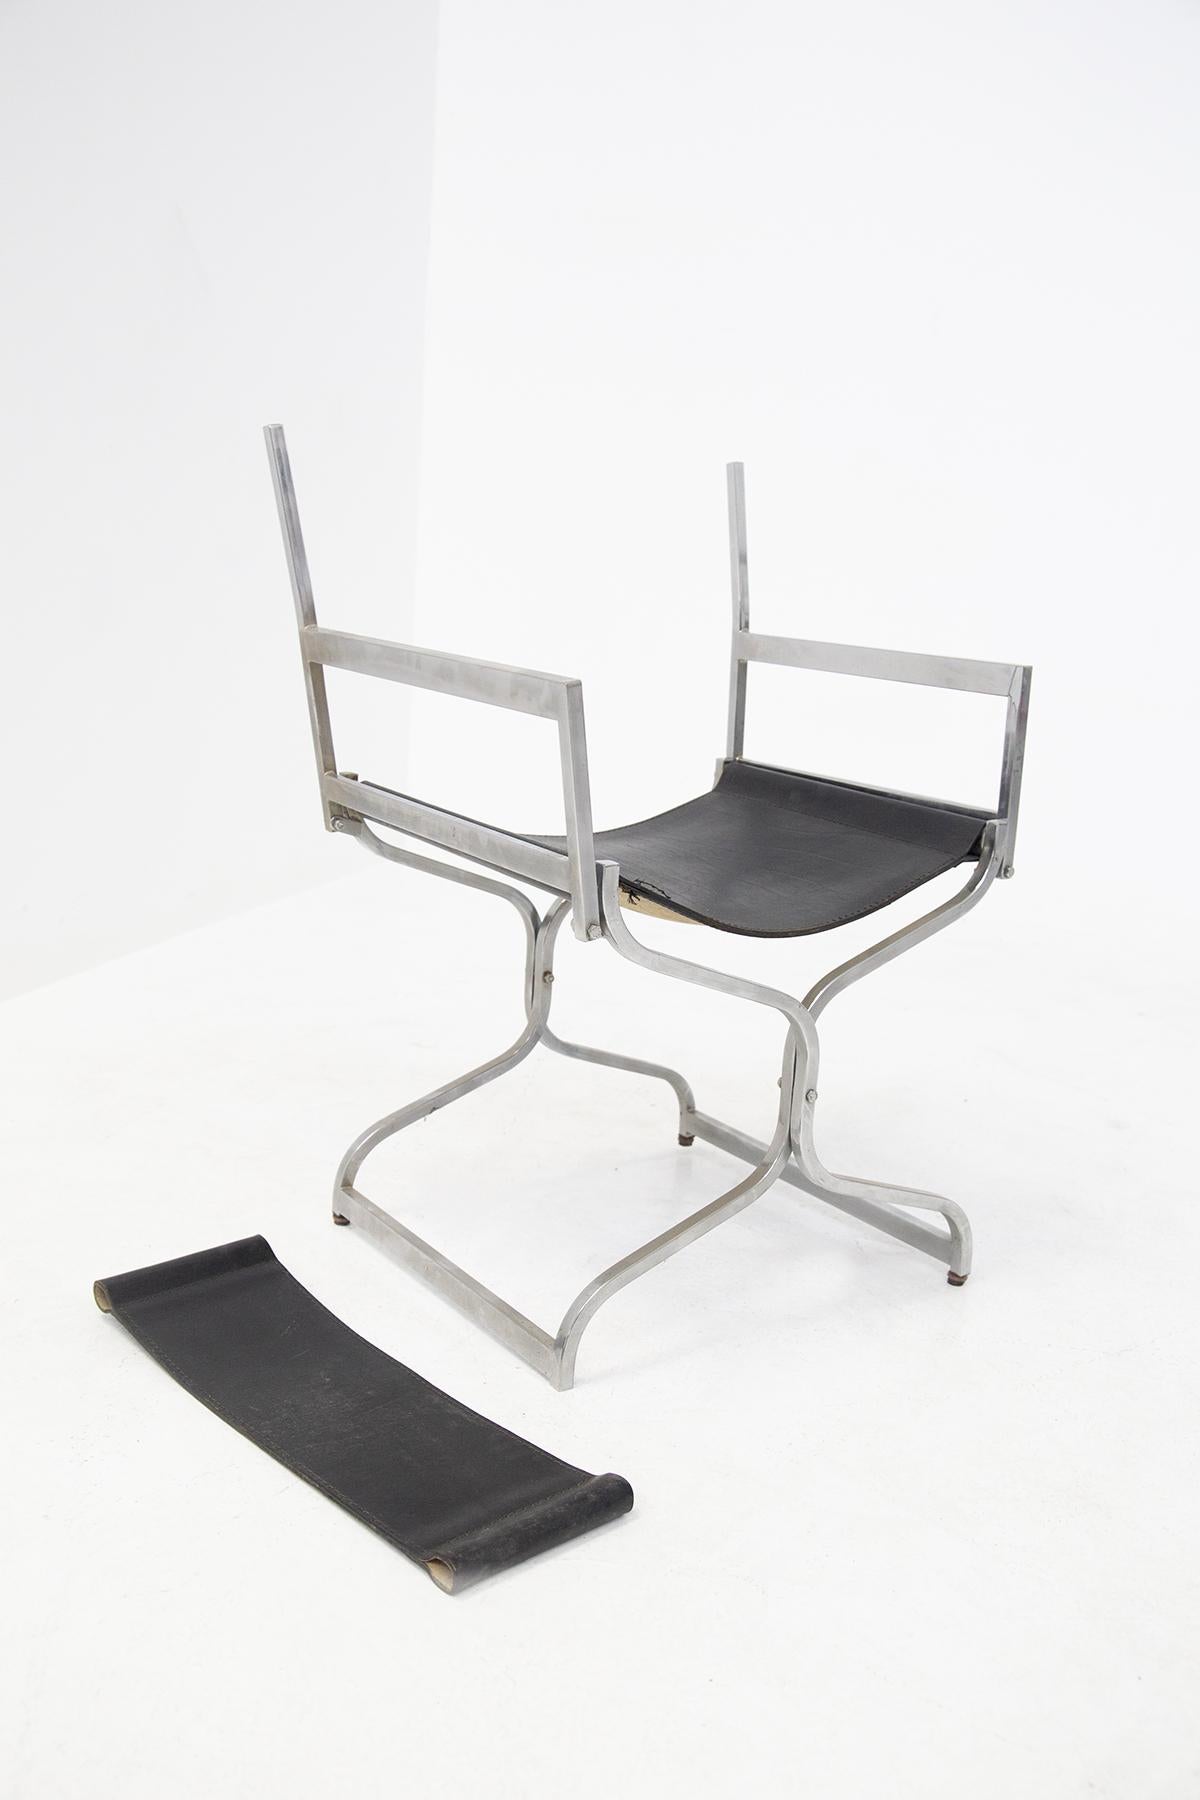 Luigi Caccia Dominioni Vintage Folding Chairs for Vips Residence Milano 1